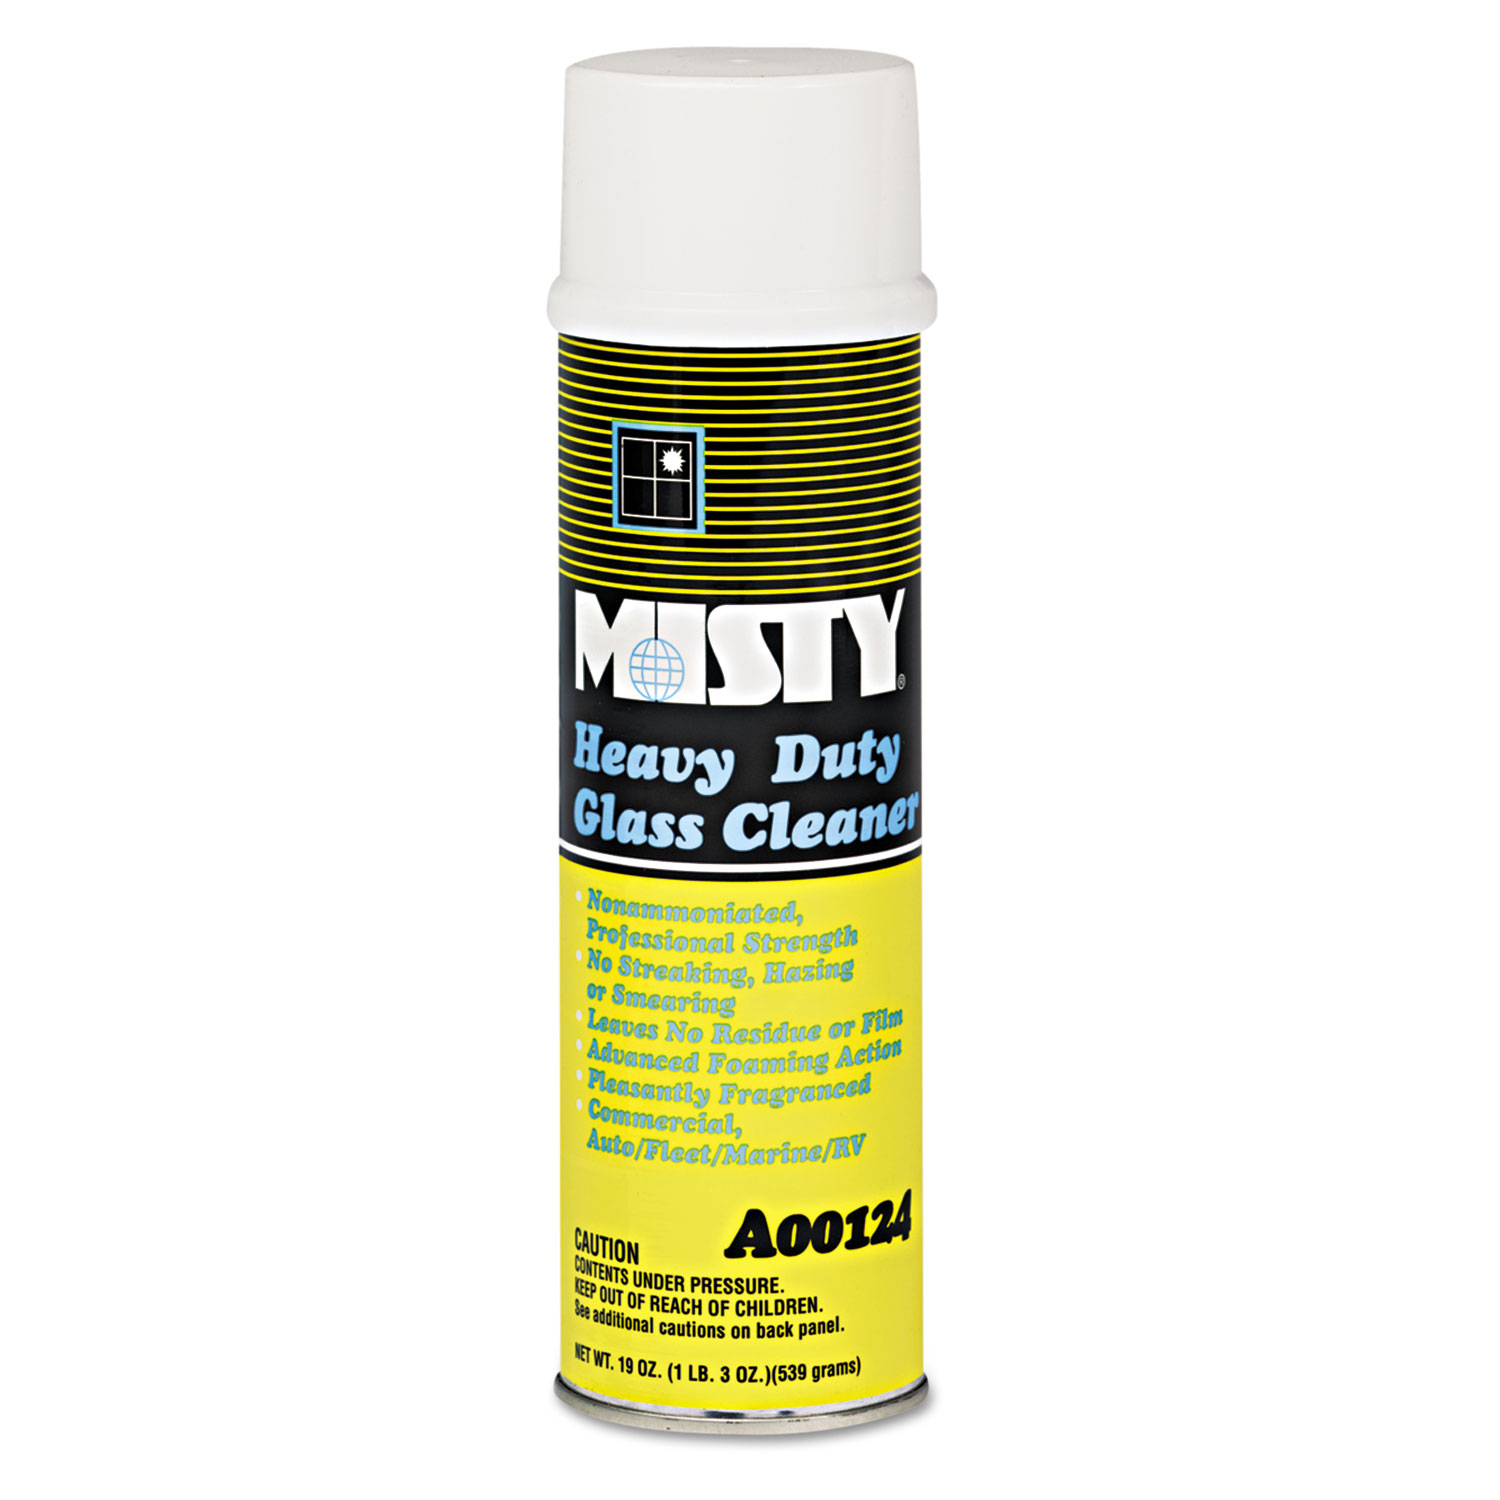 Heavy-Duty Glass Cleaner, Citrus, 20 oz Aerosol Spray, 12/Carton